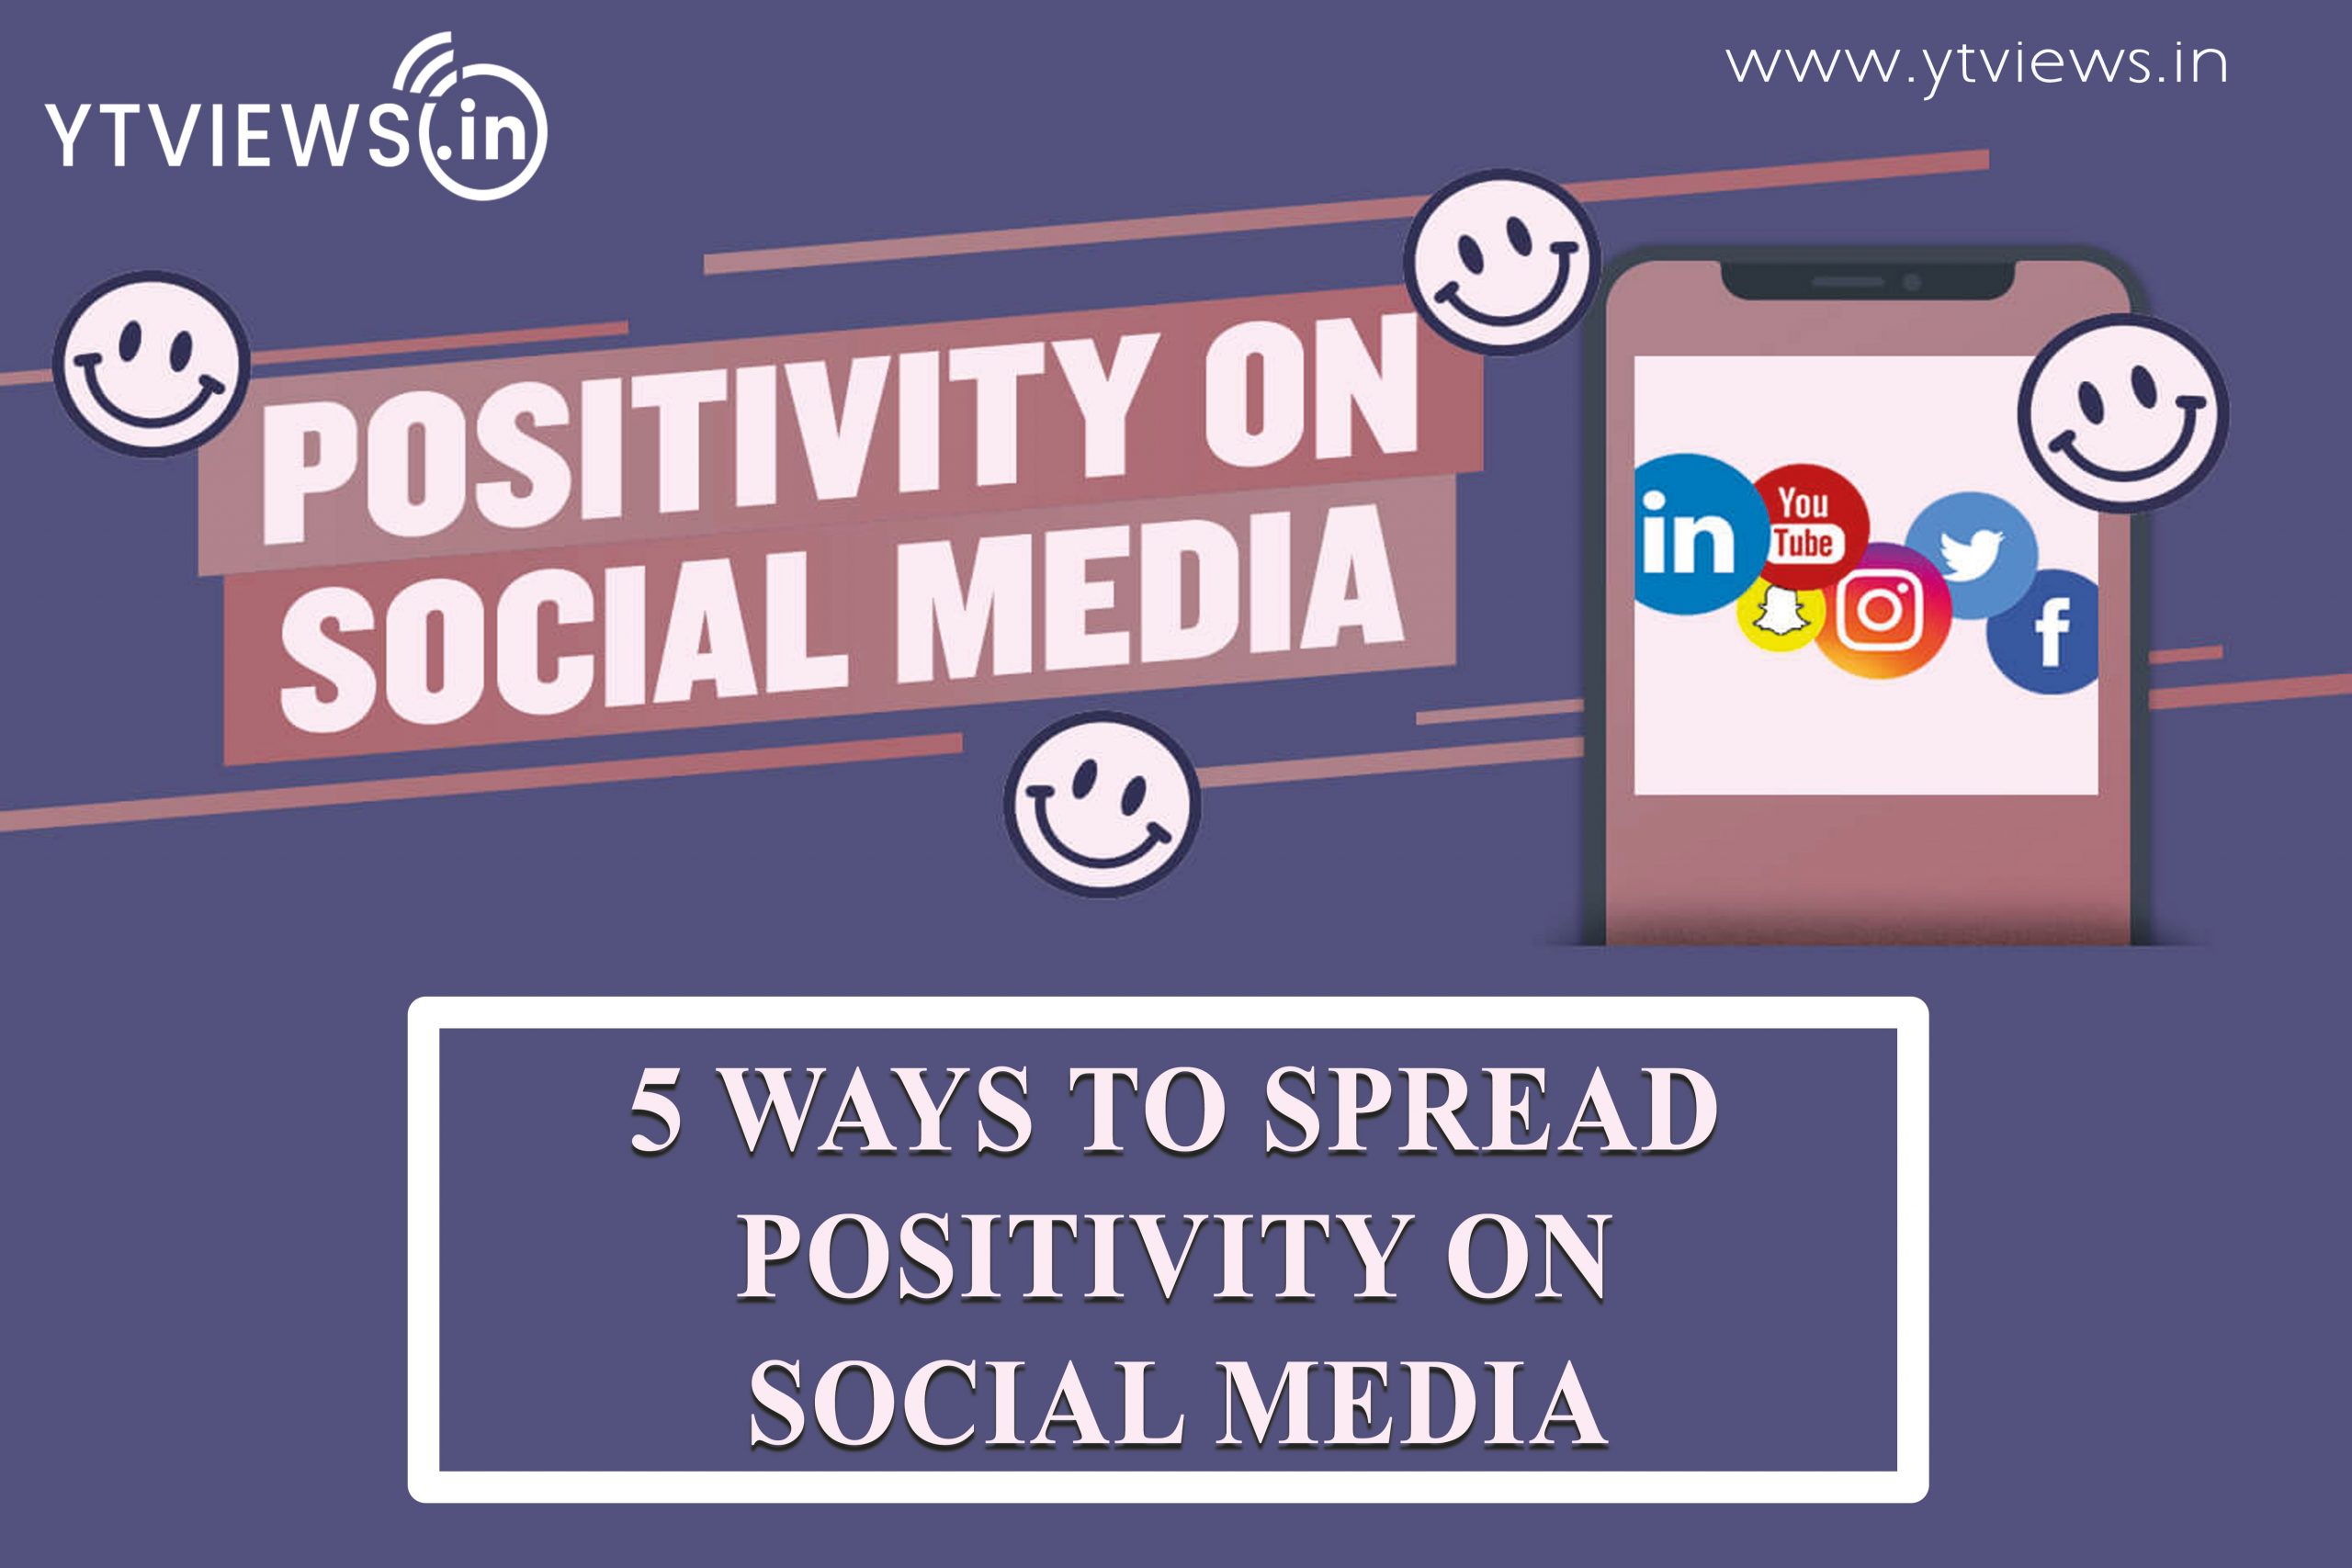 5 ways to spread positivity on social media